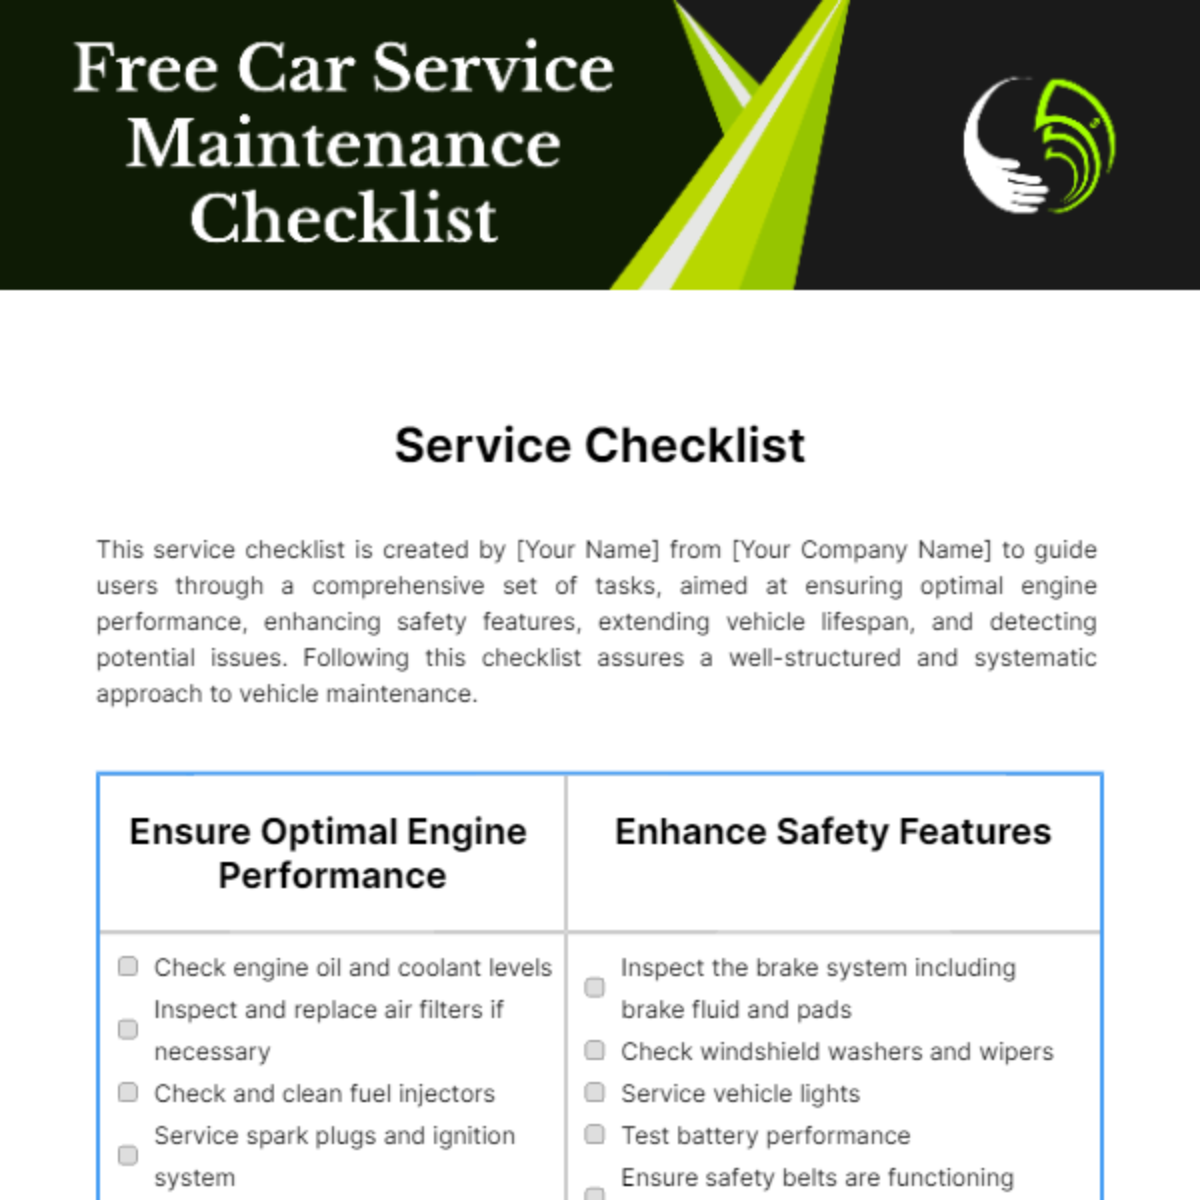 Free Car Service Maintenance Checklist Template